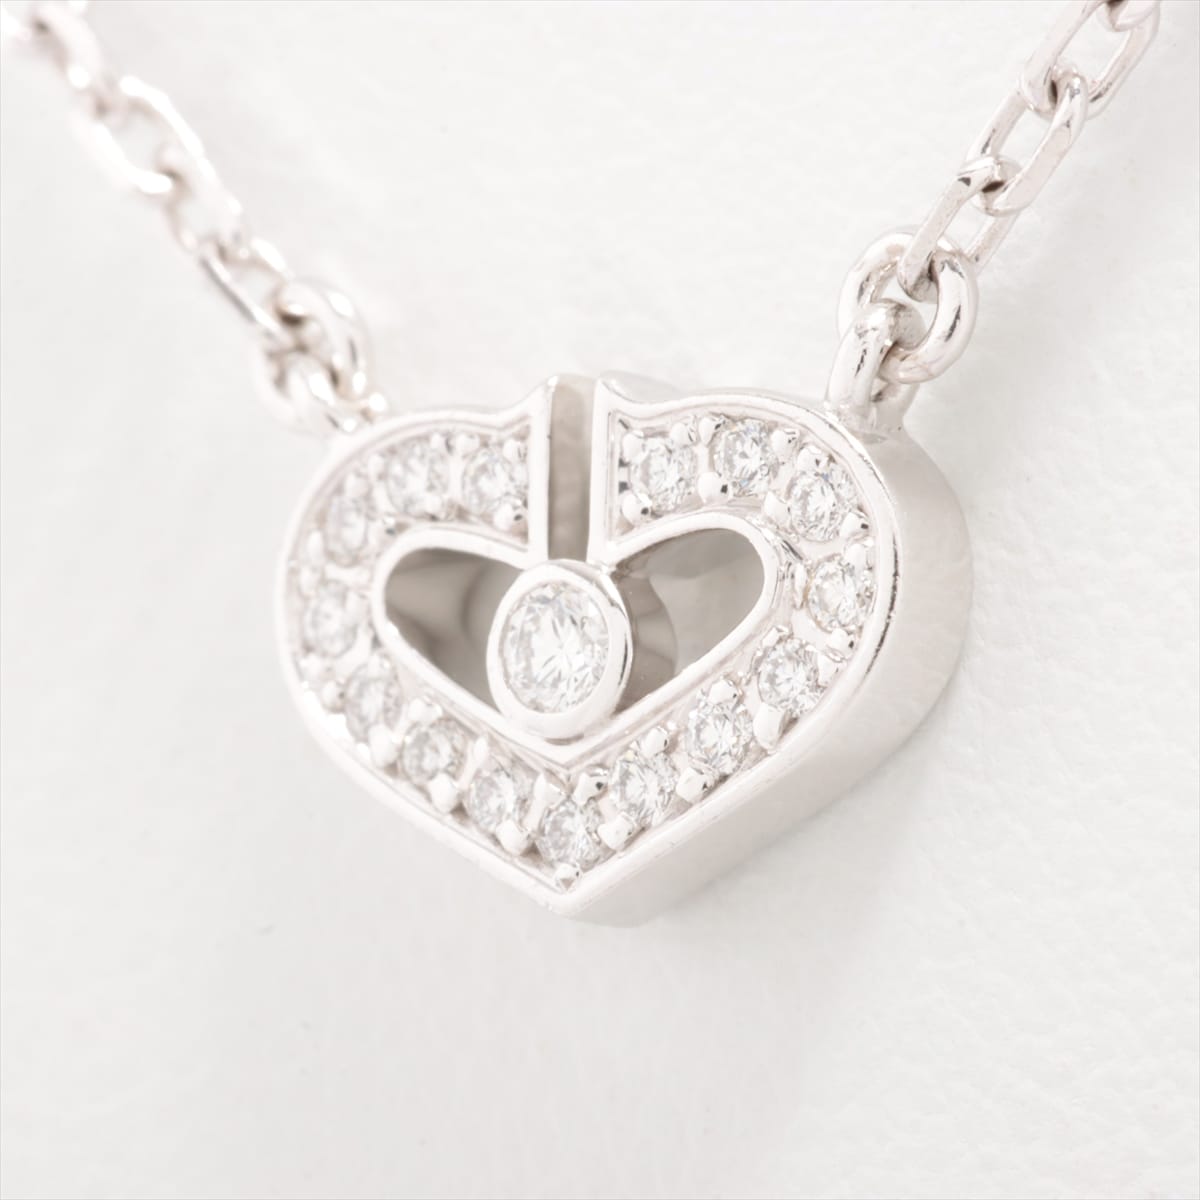 Cartier C Heart diamond Necklace 750WG 4.4g